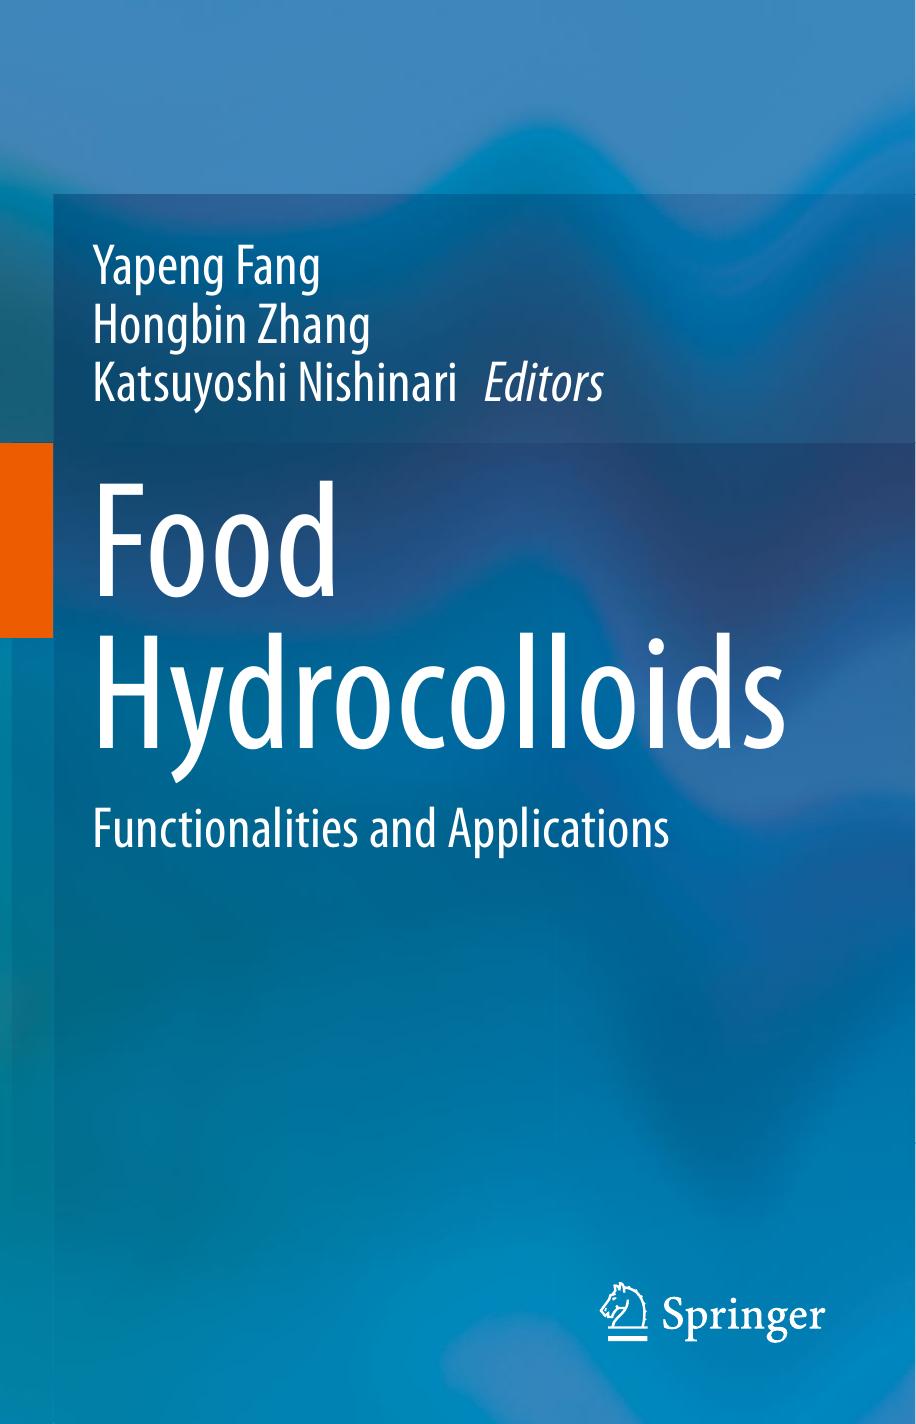 Food Hydrocolloids 2021